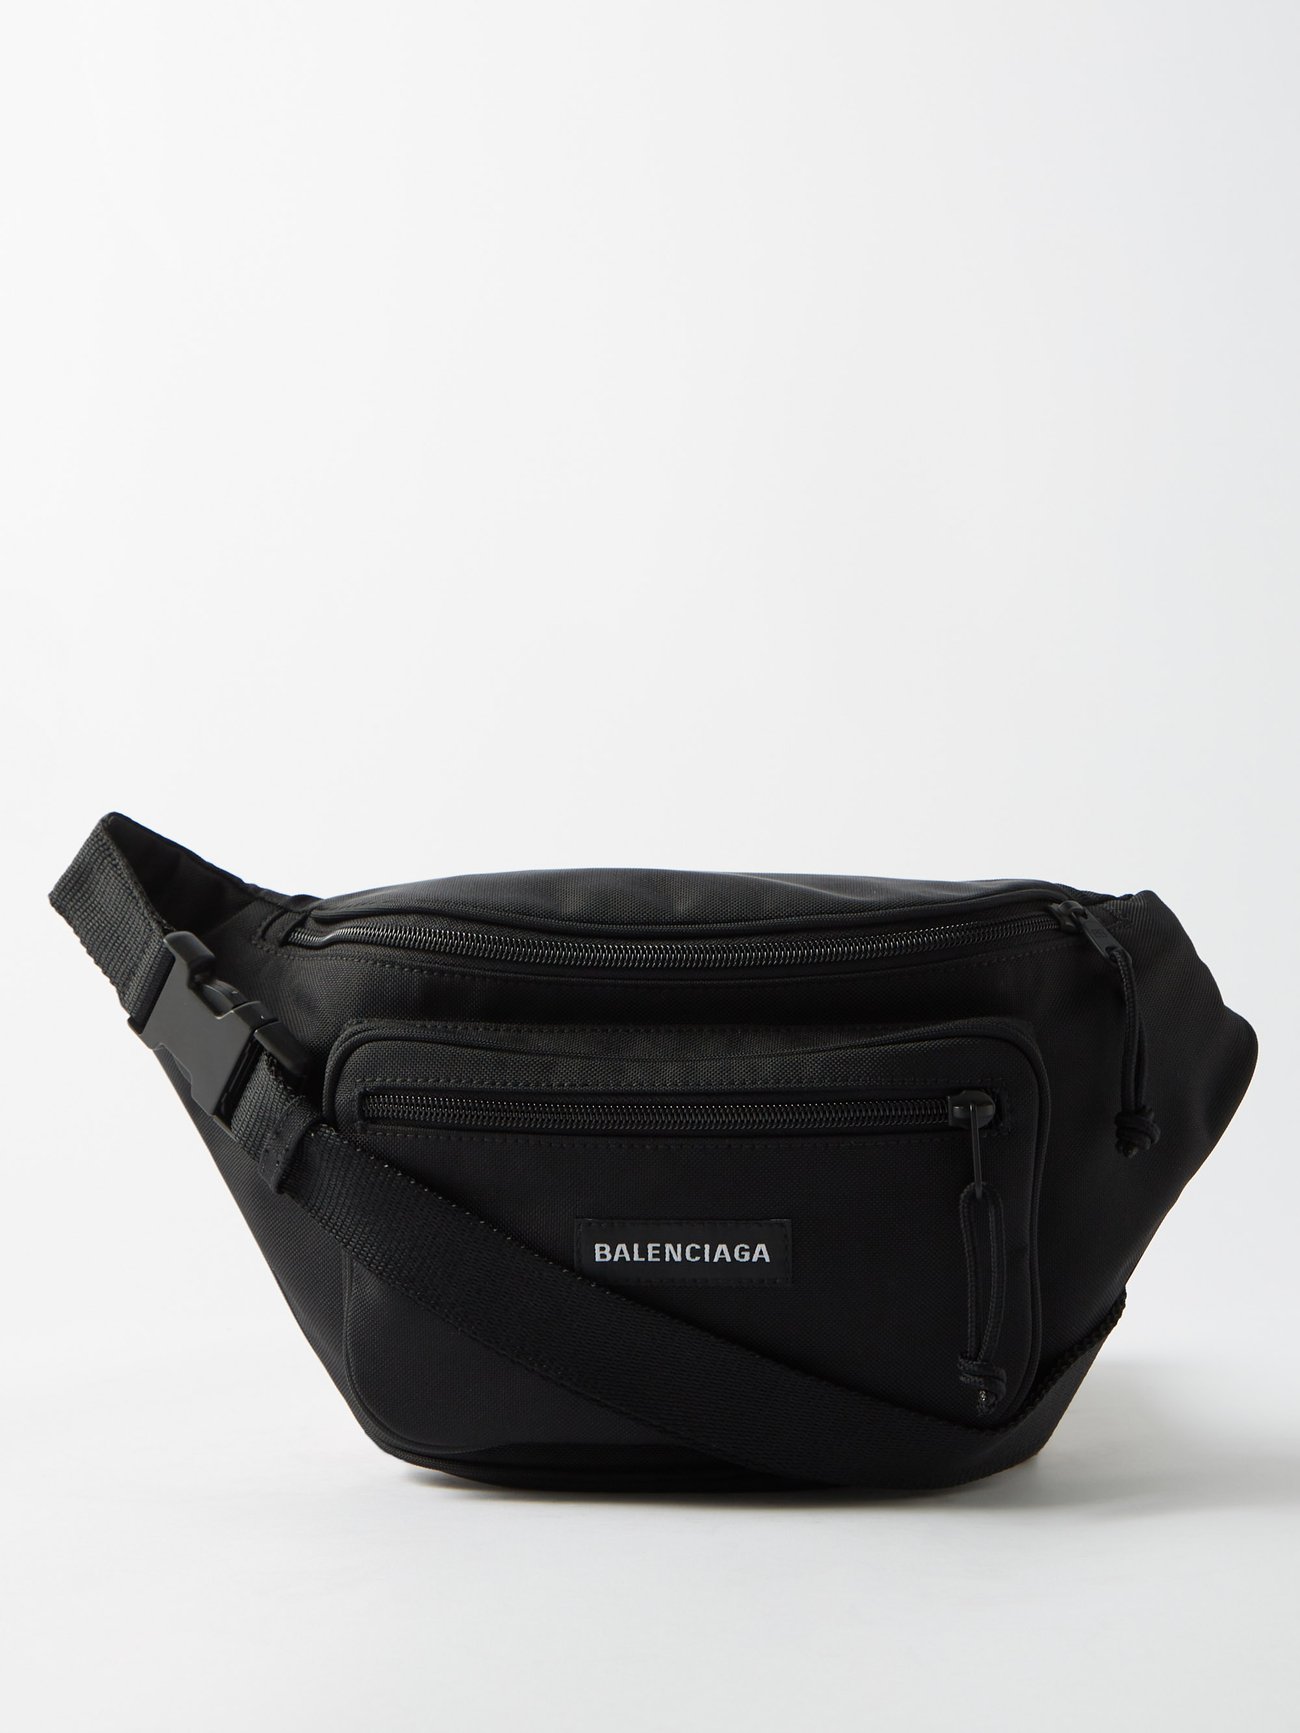 Luxury bag - Balenciaga Explorer belt bag in red nylon